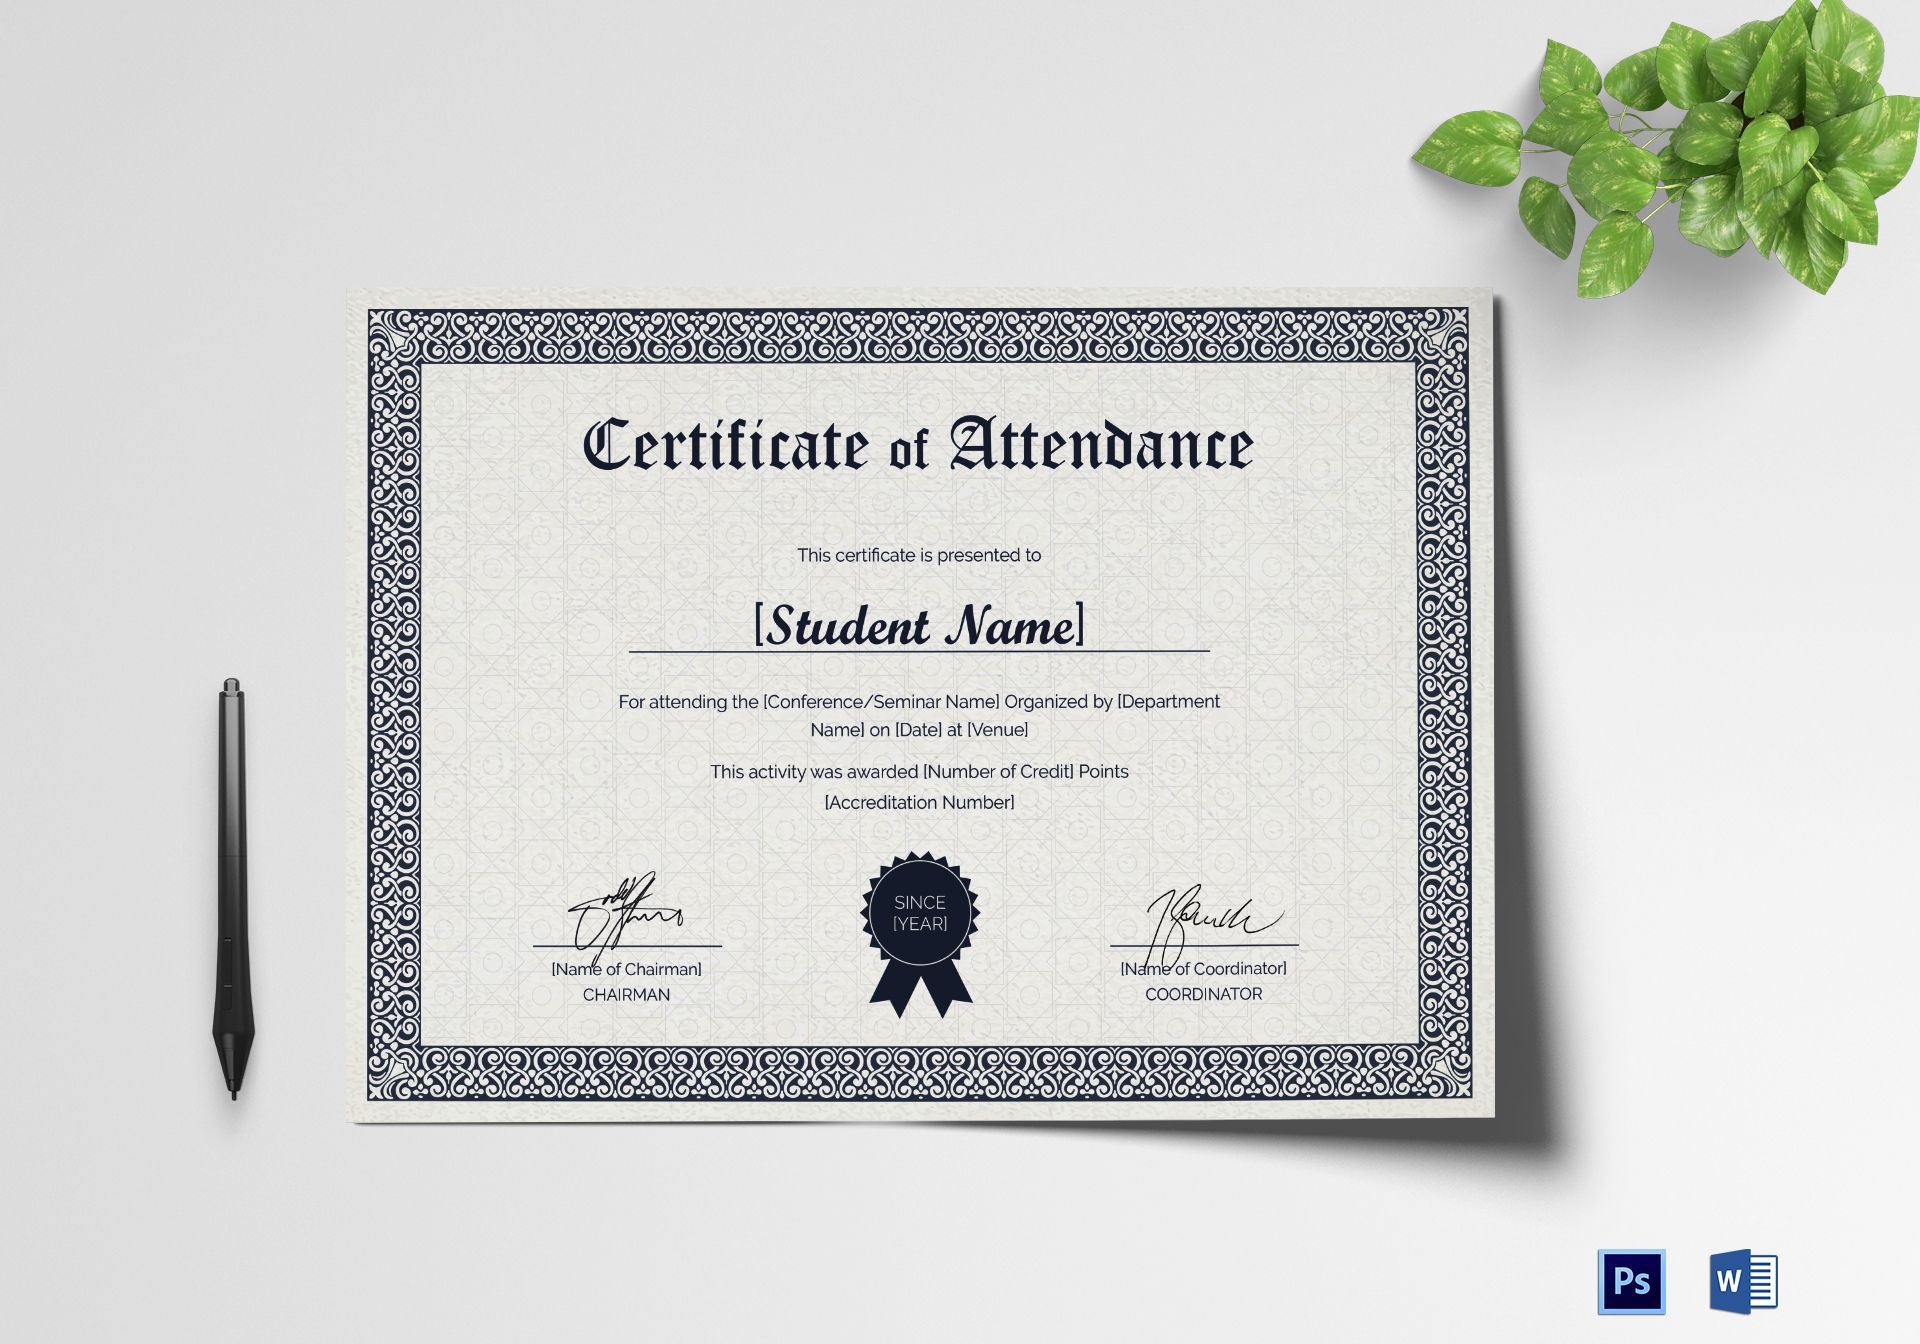 Students Attendance Certificate Template Regarding Conference Certificate Of Attendance Template